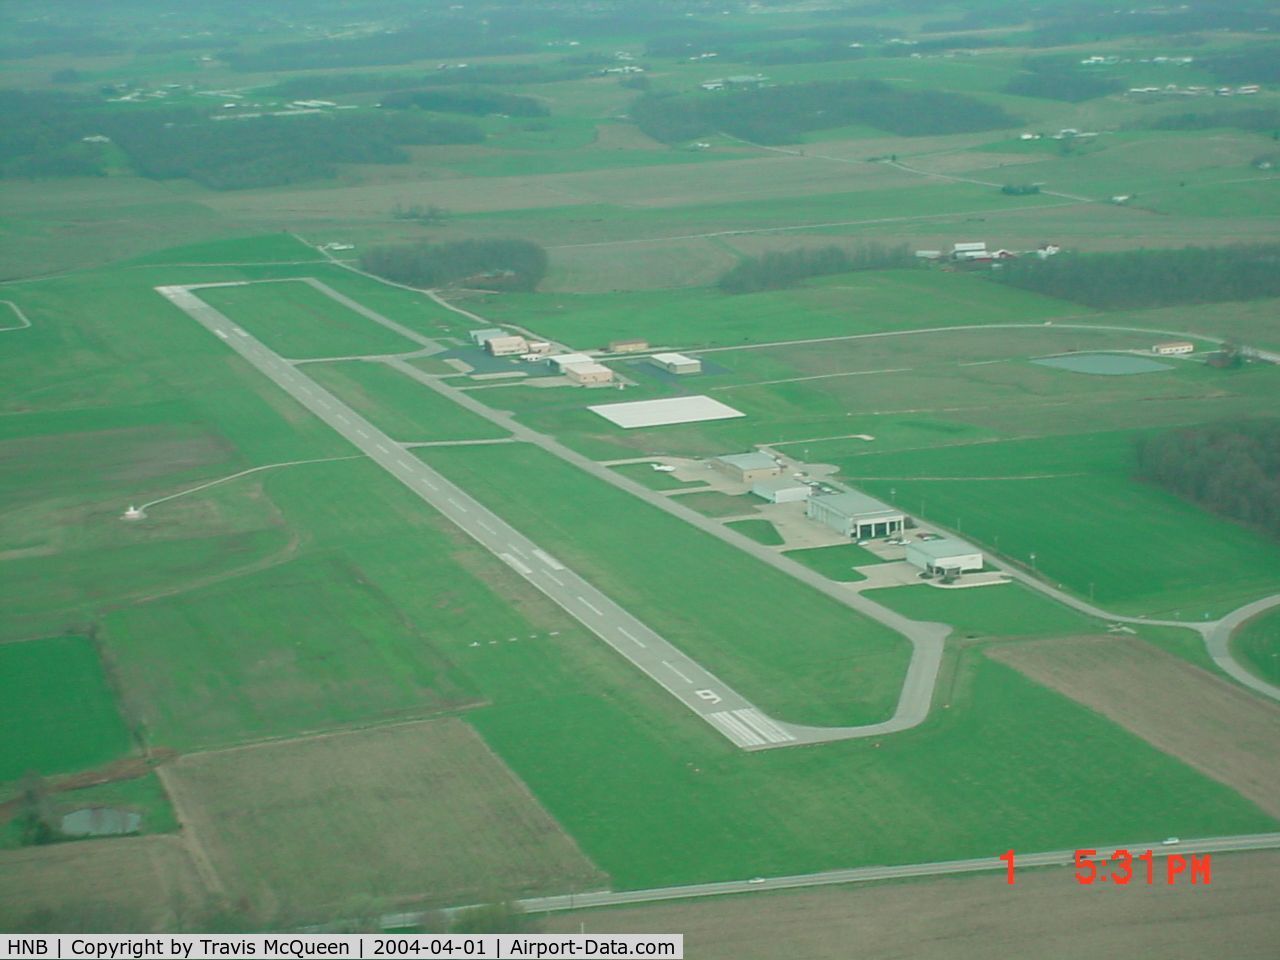 Huntingburg Airport (HNB) - Huntingburg Airport during the spring of 2004